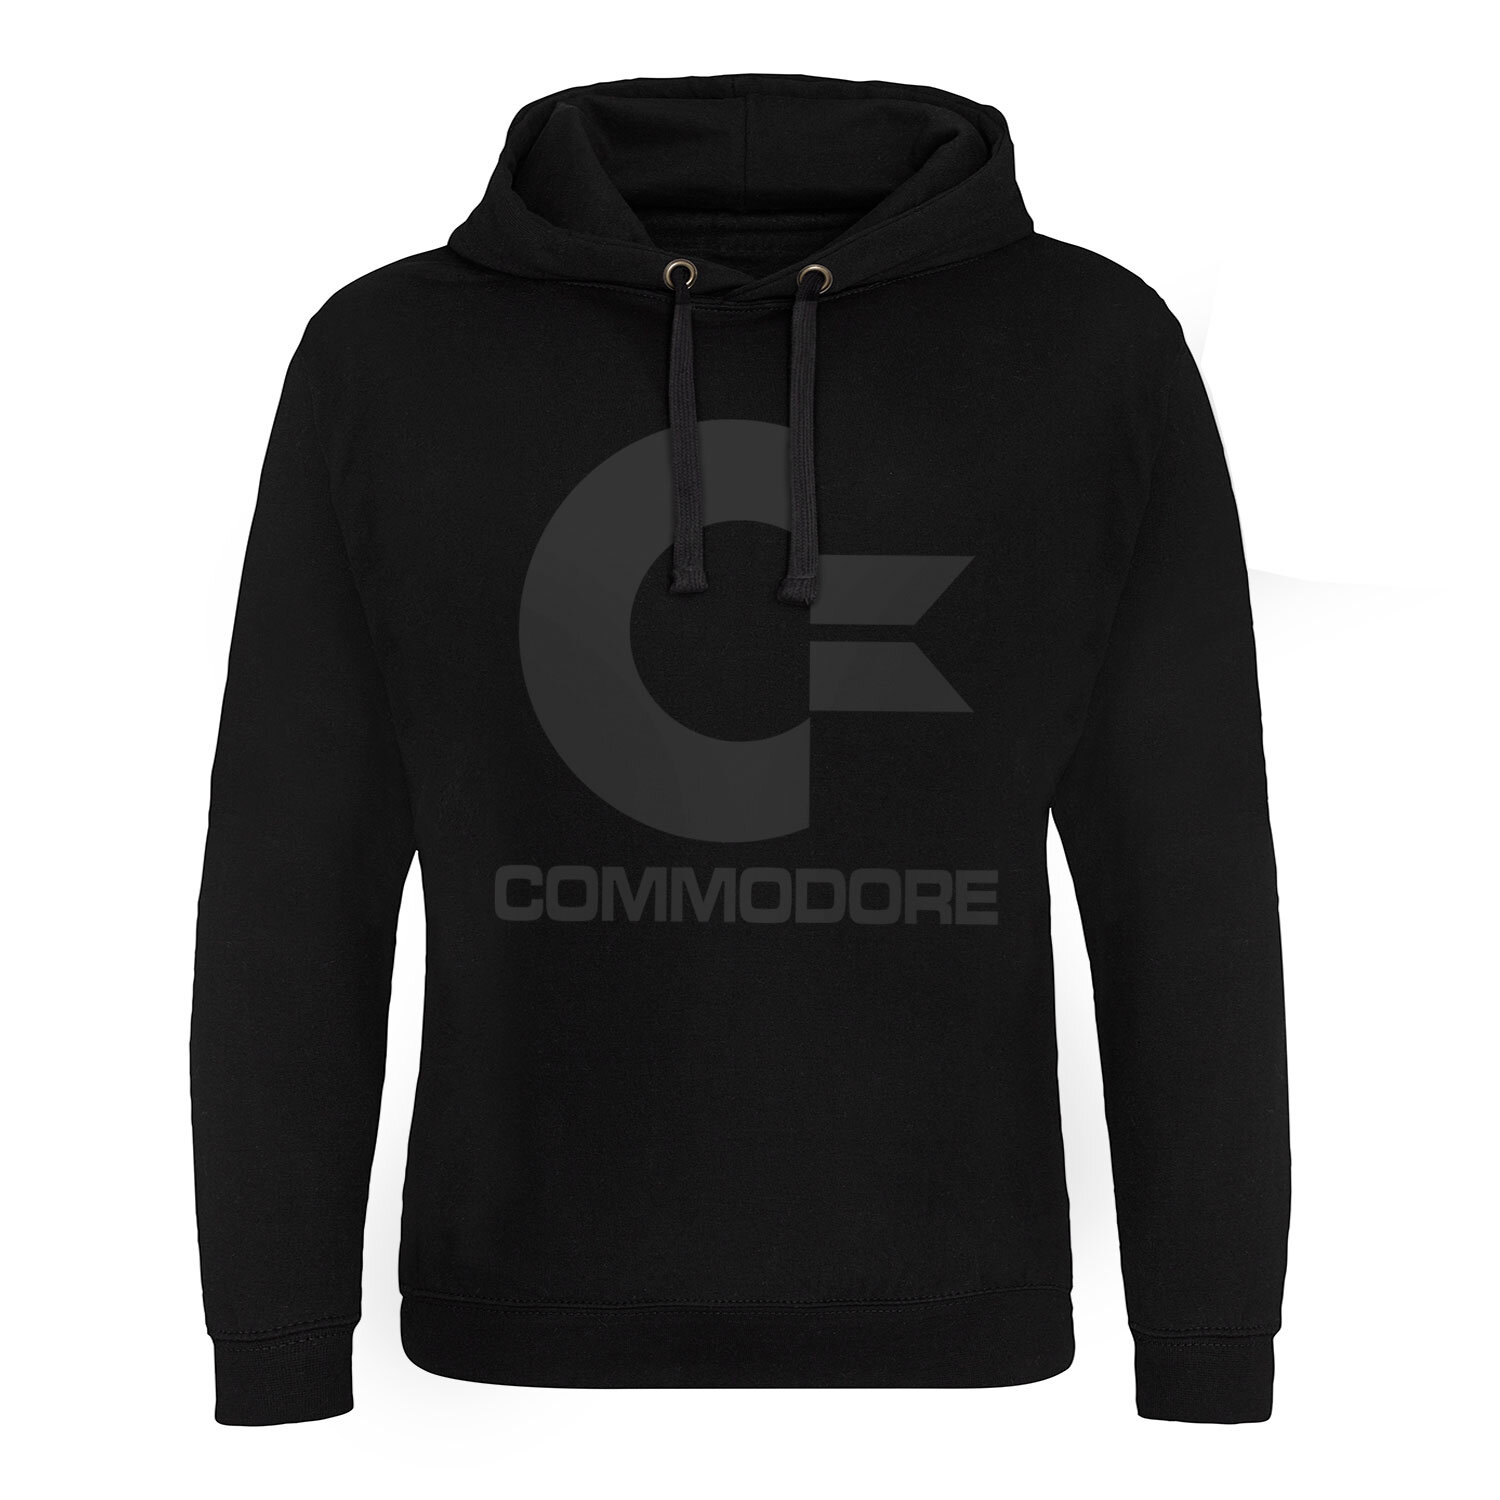 Commodore Black Logo Epic Hoodie